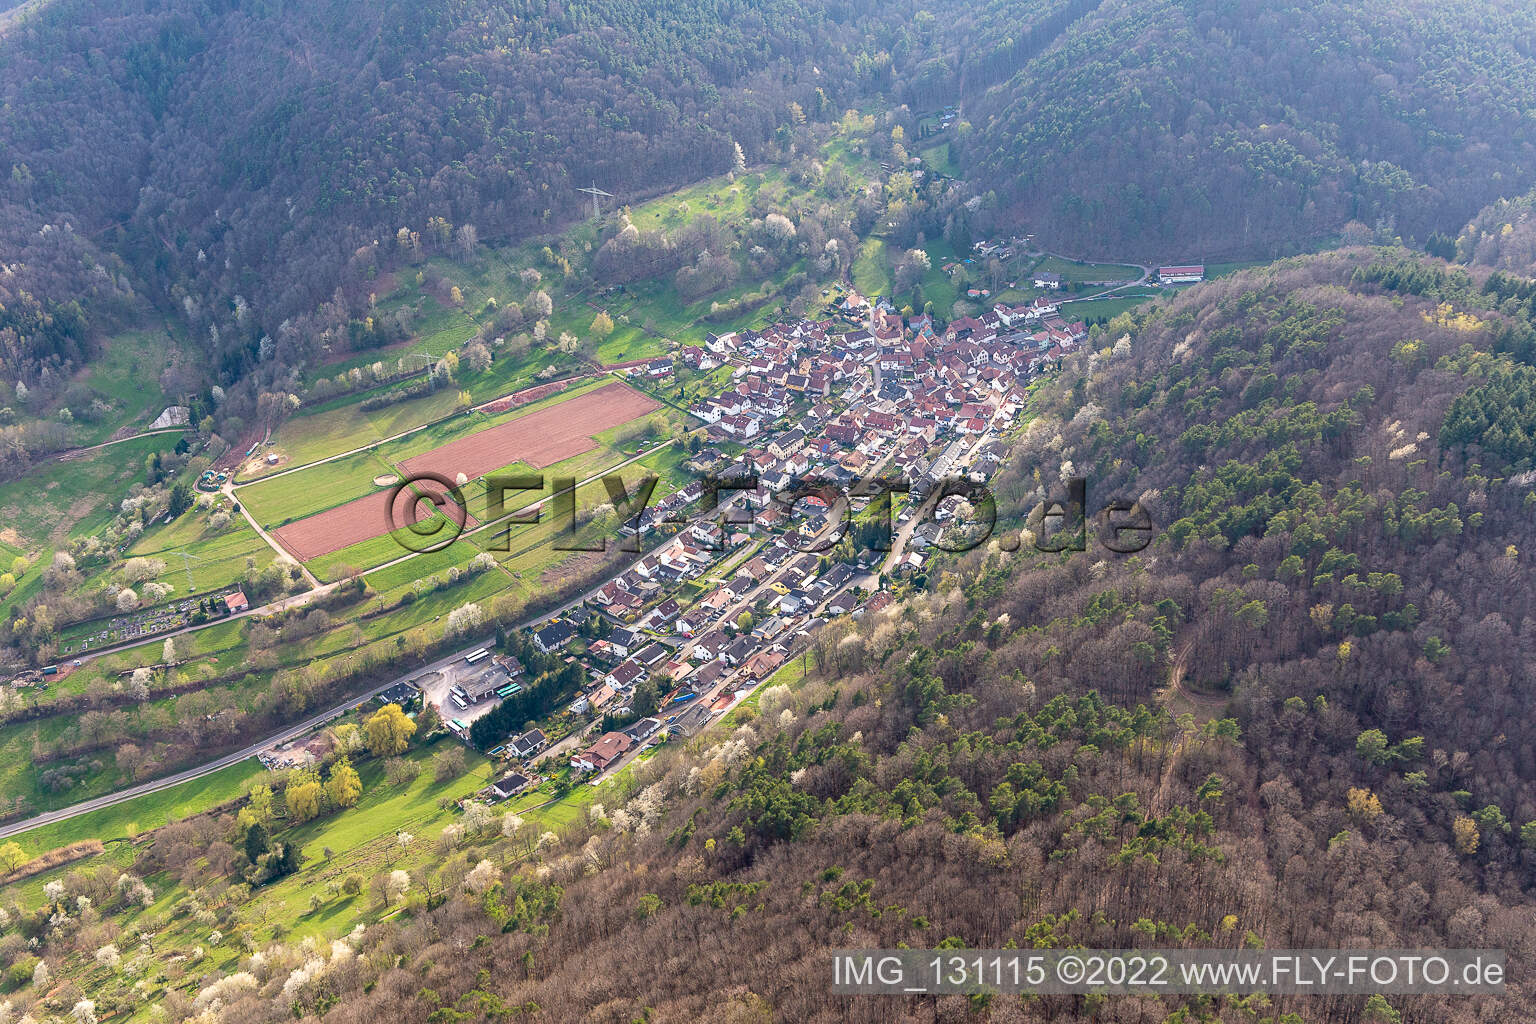 District Gräfenhausen in Annweiler am Trifels in the state Rhineland-Palatinate, Germany viewn from the air